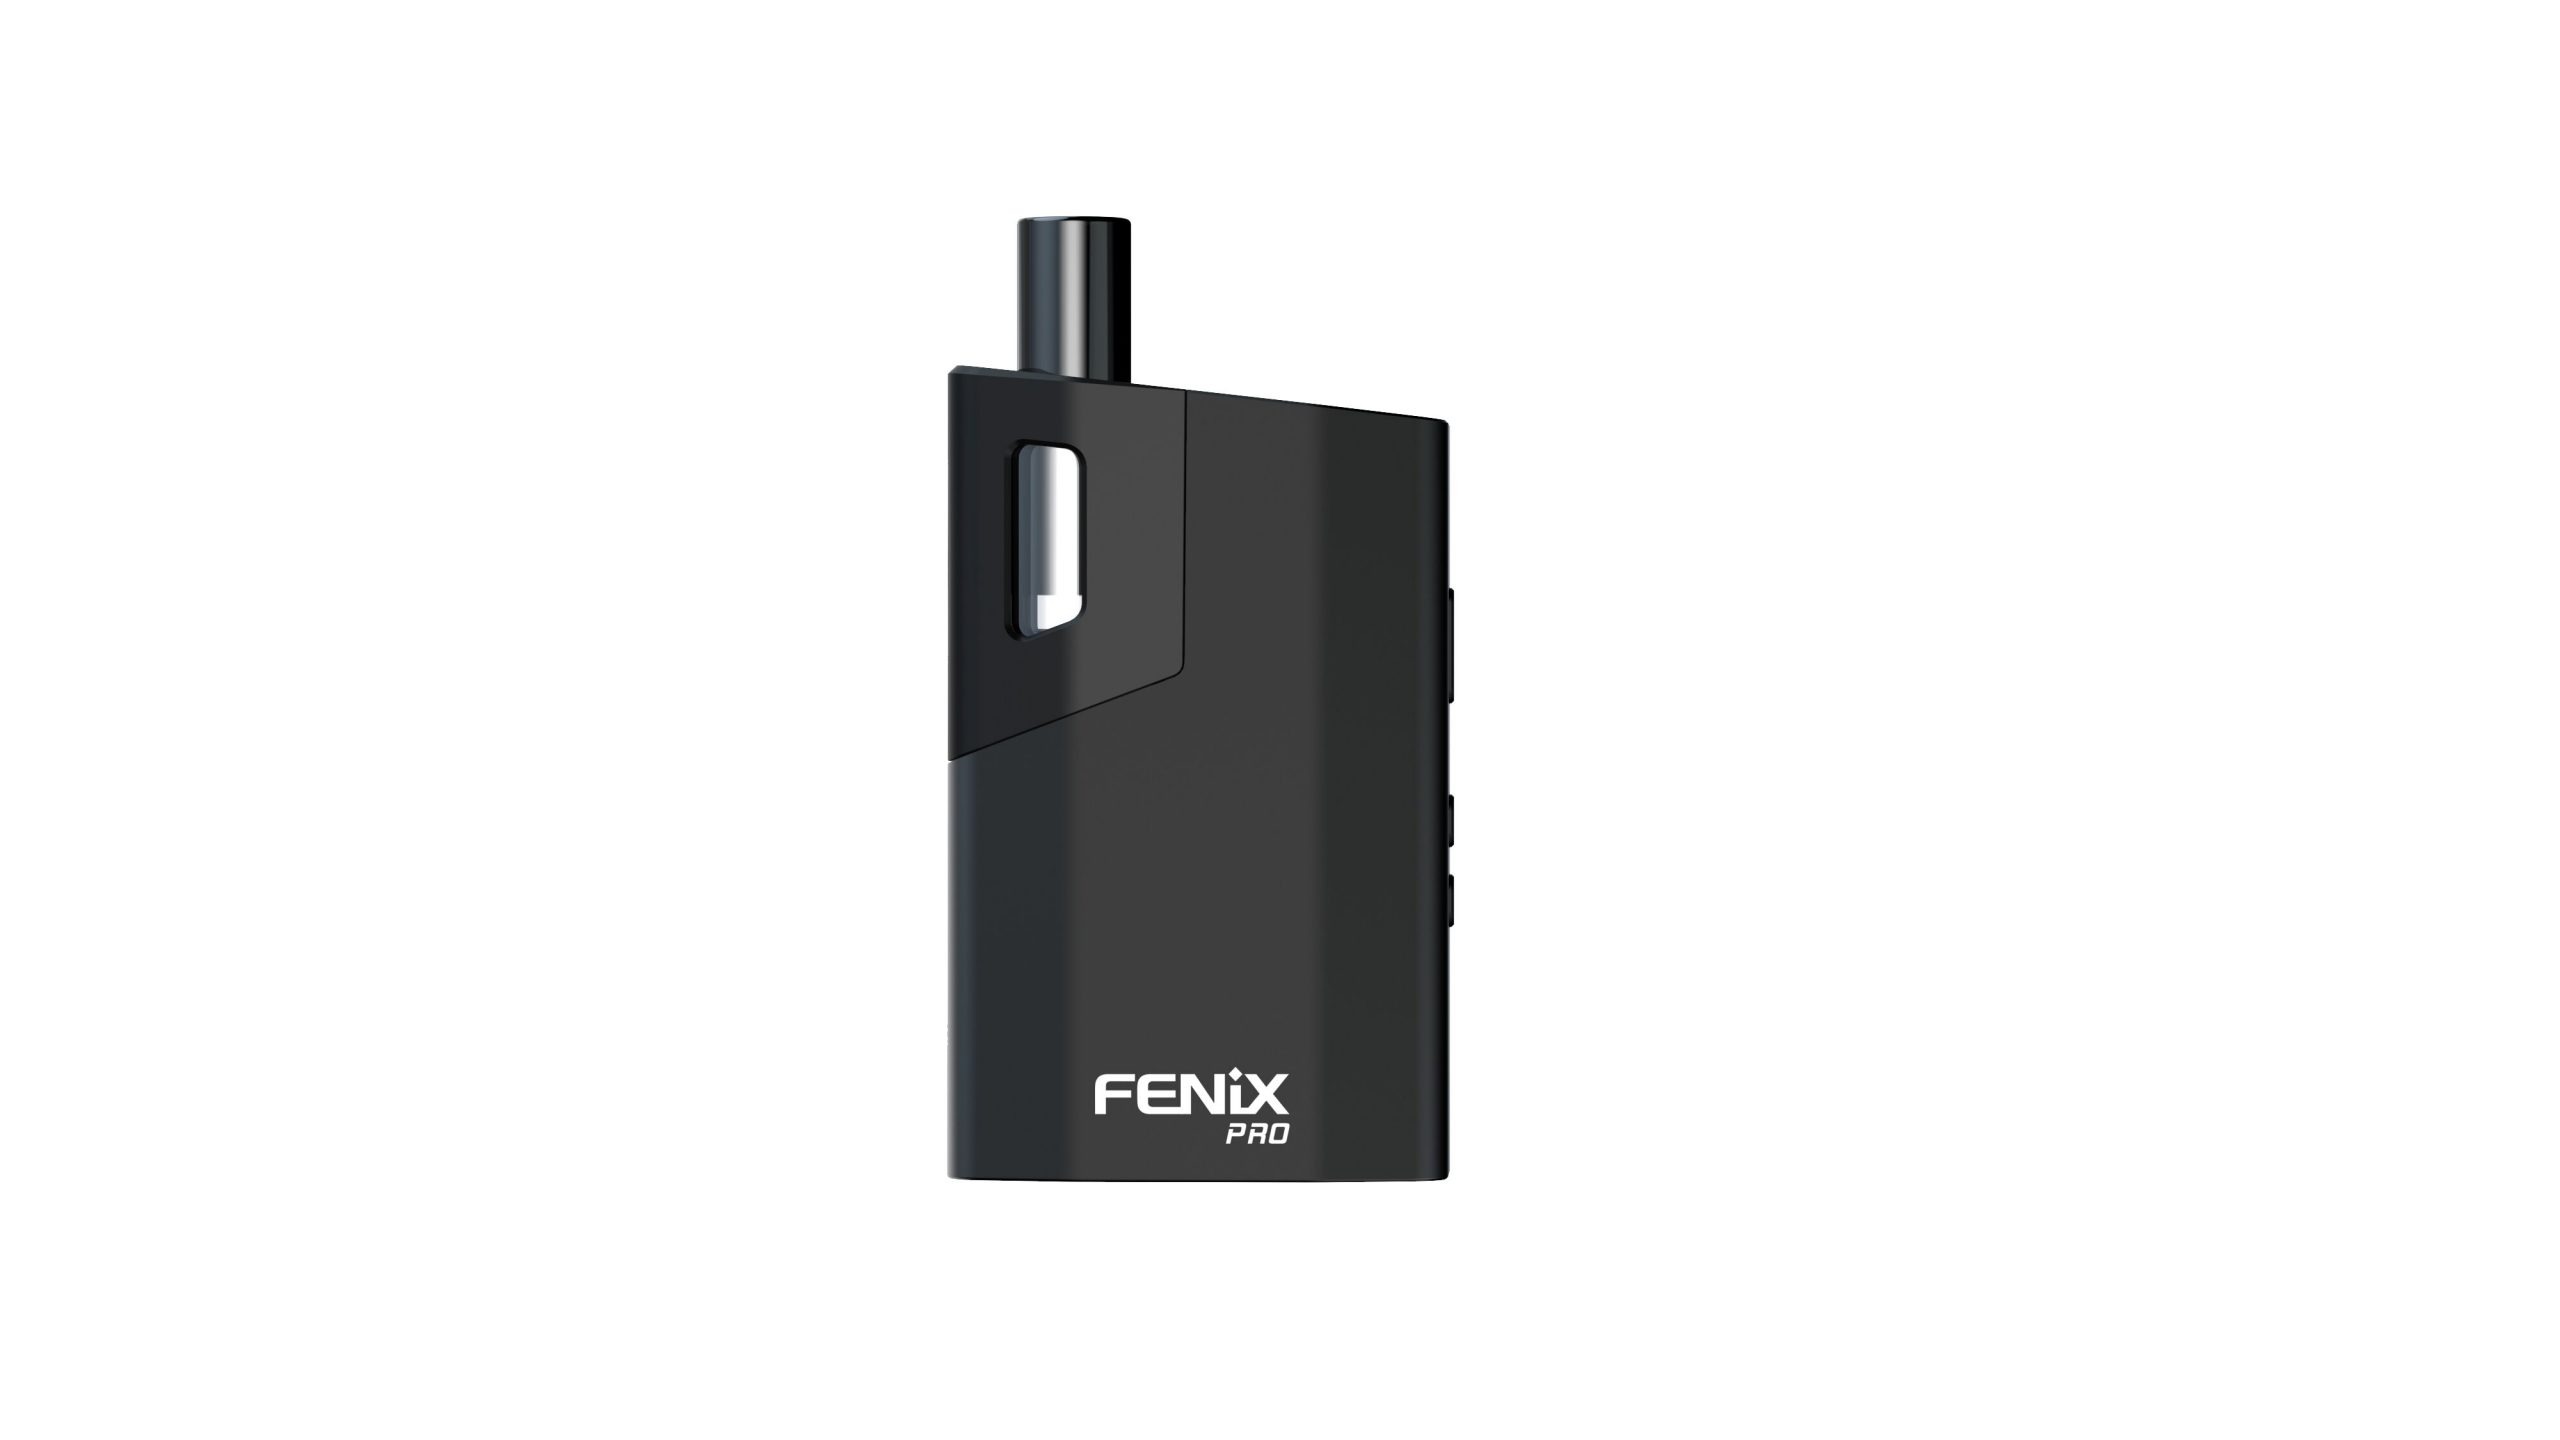 vaporisateur FENIX mini - WEECKE - planete sfactory.com